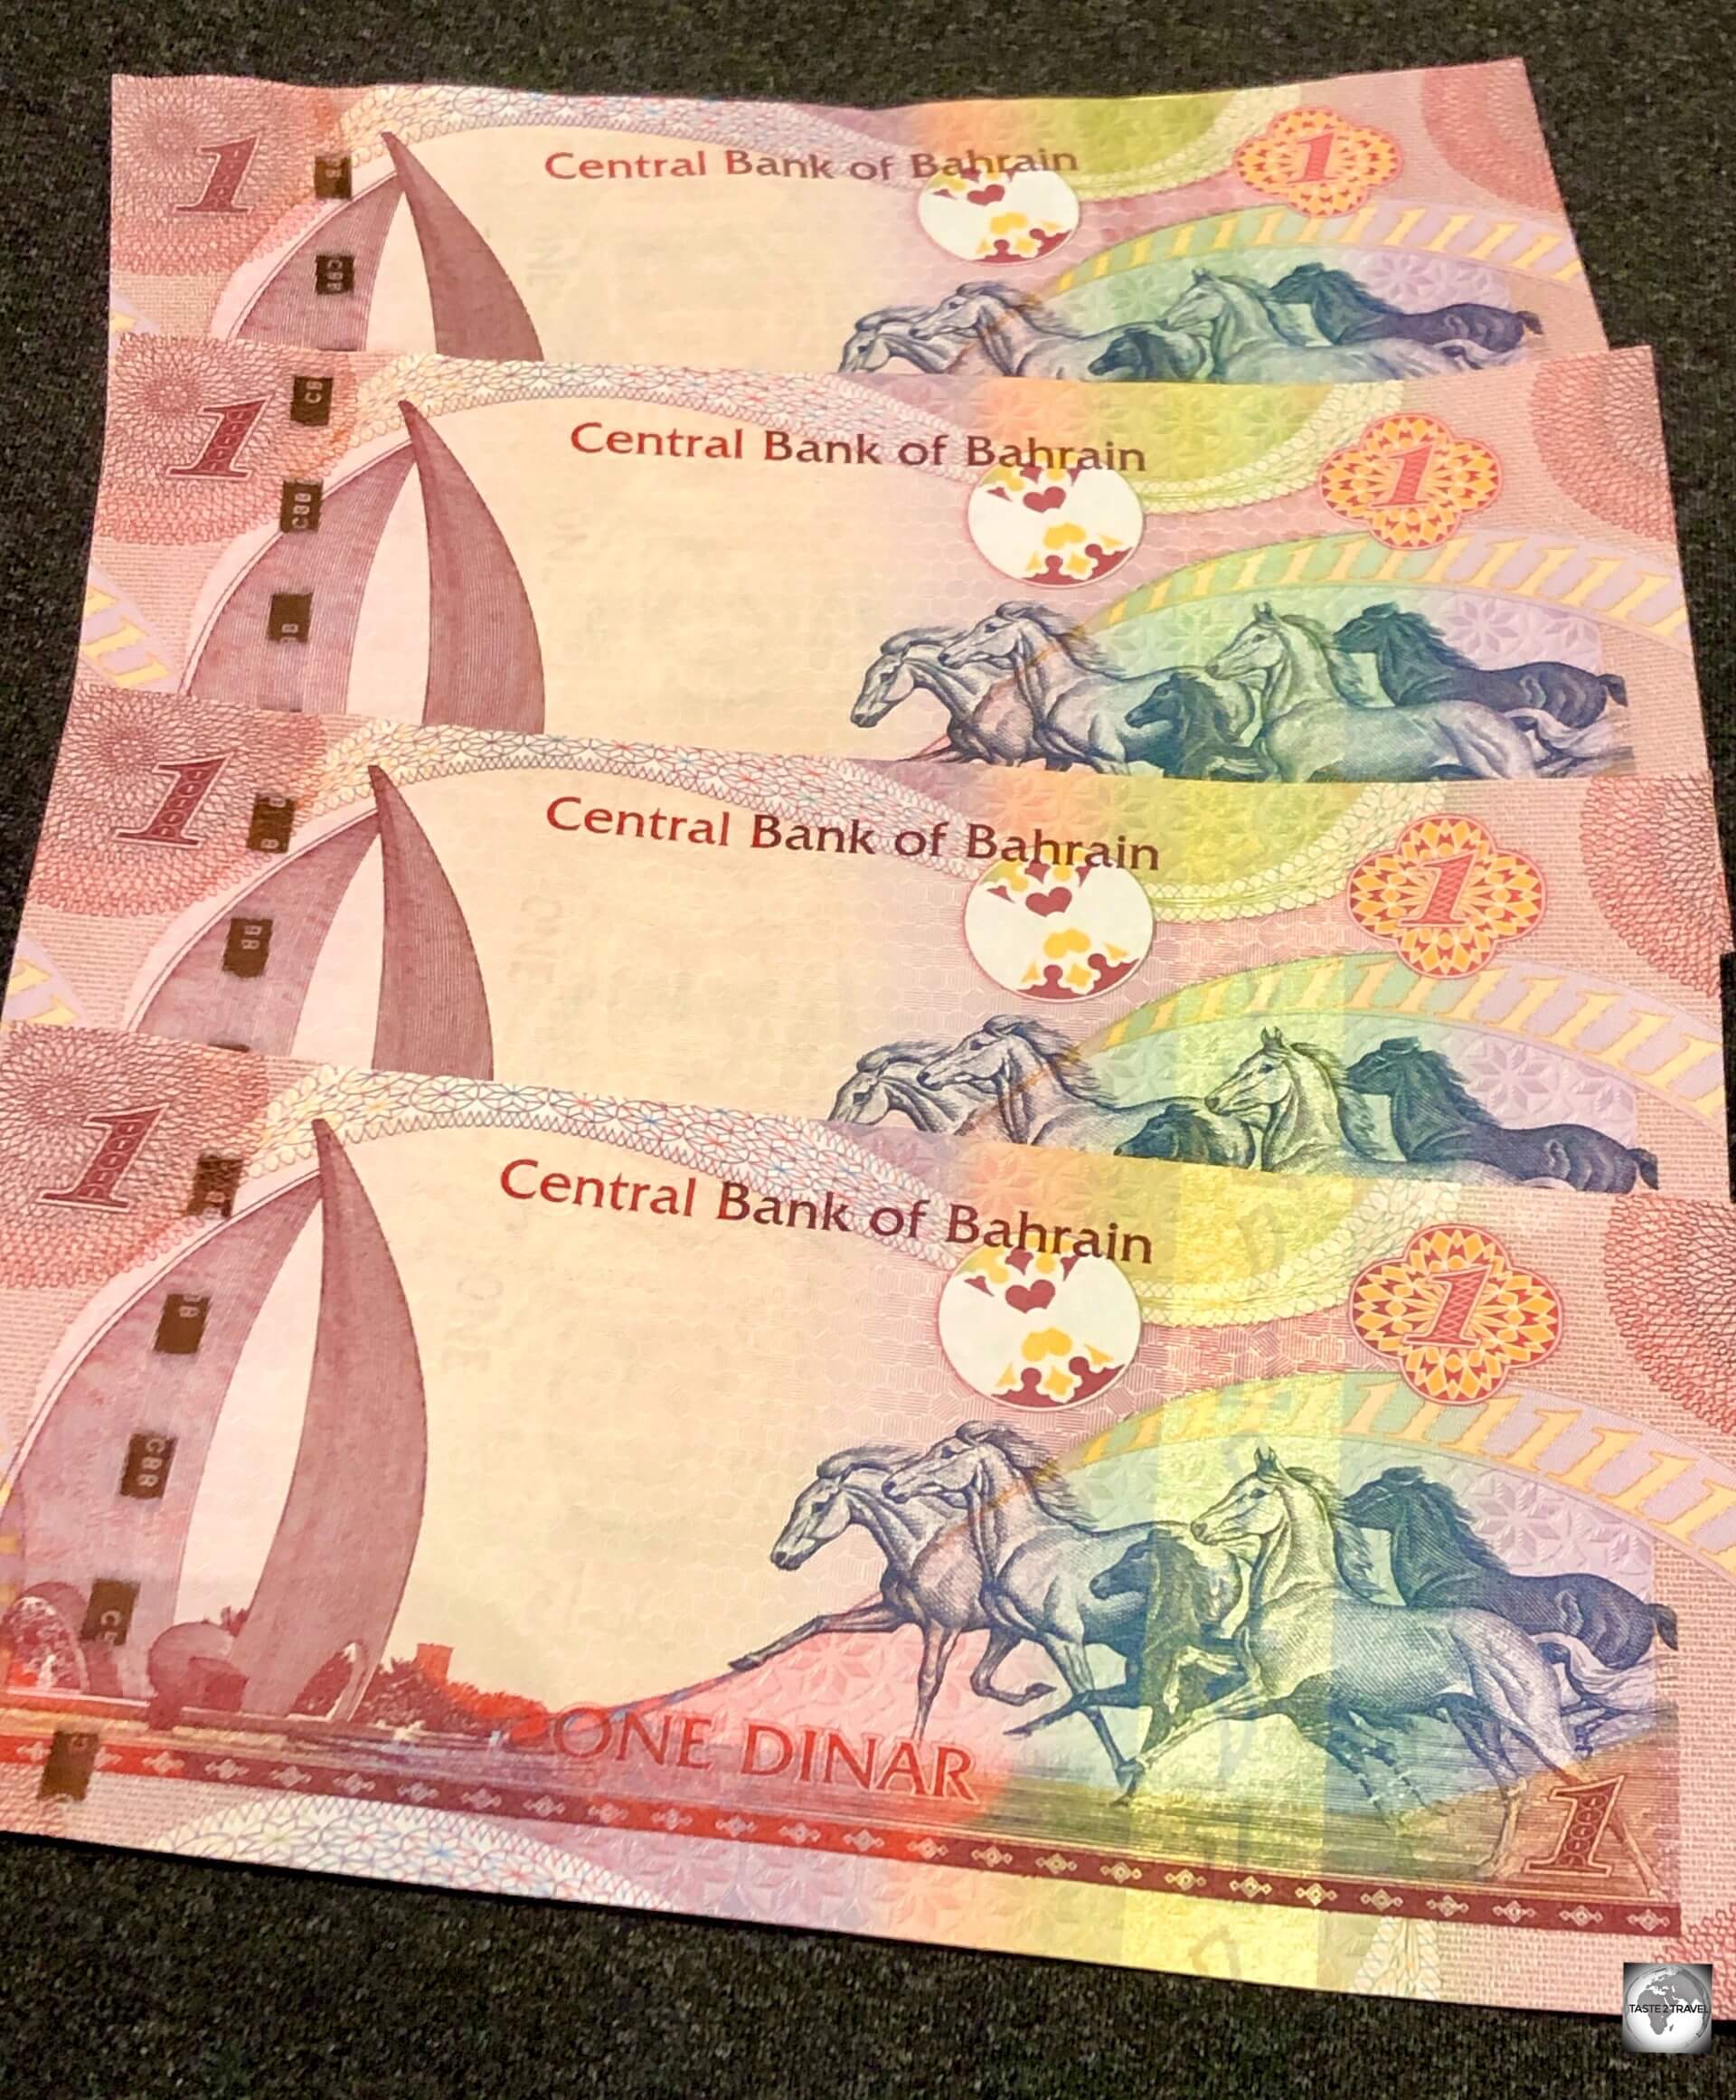 Uncirculated, Bahrain one-dinar banknotes. 